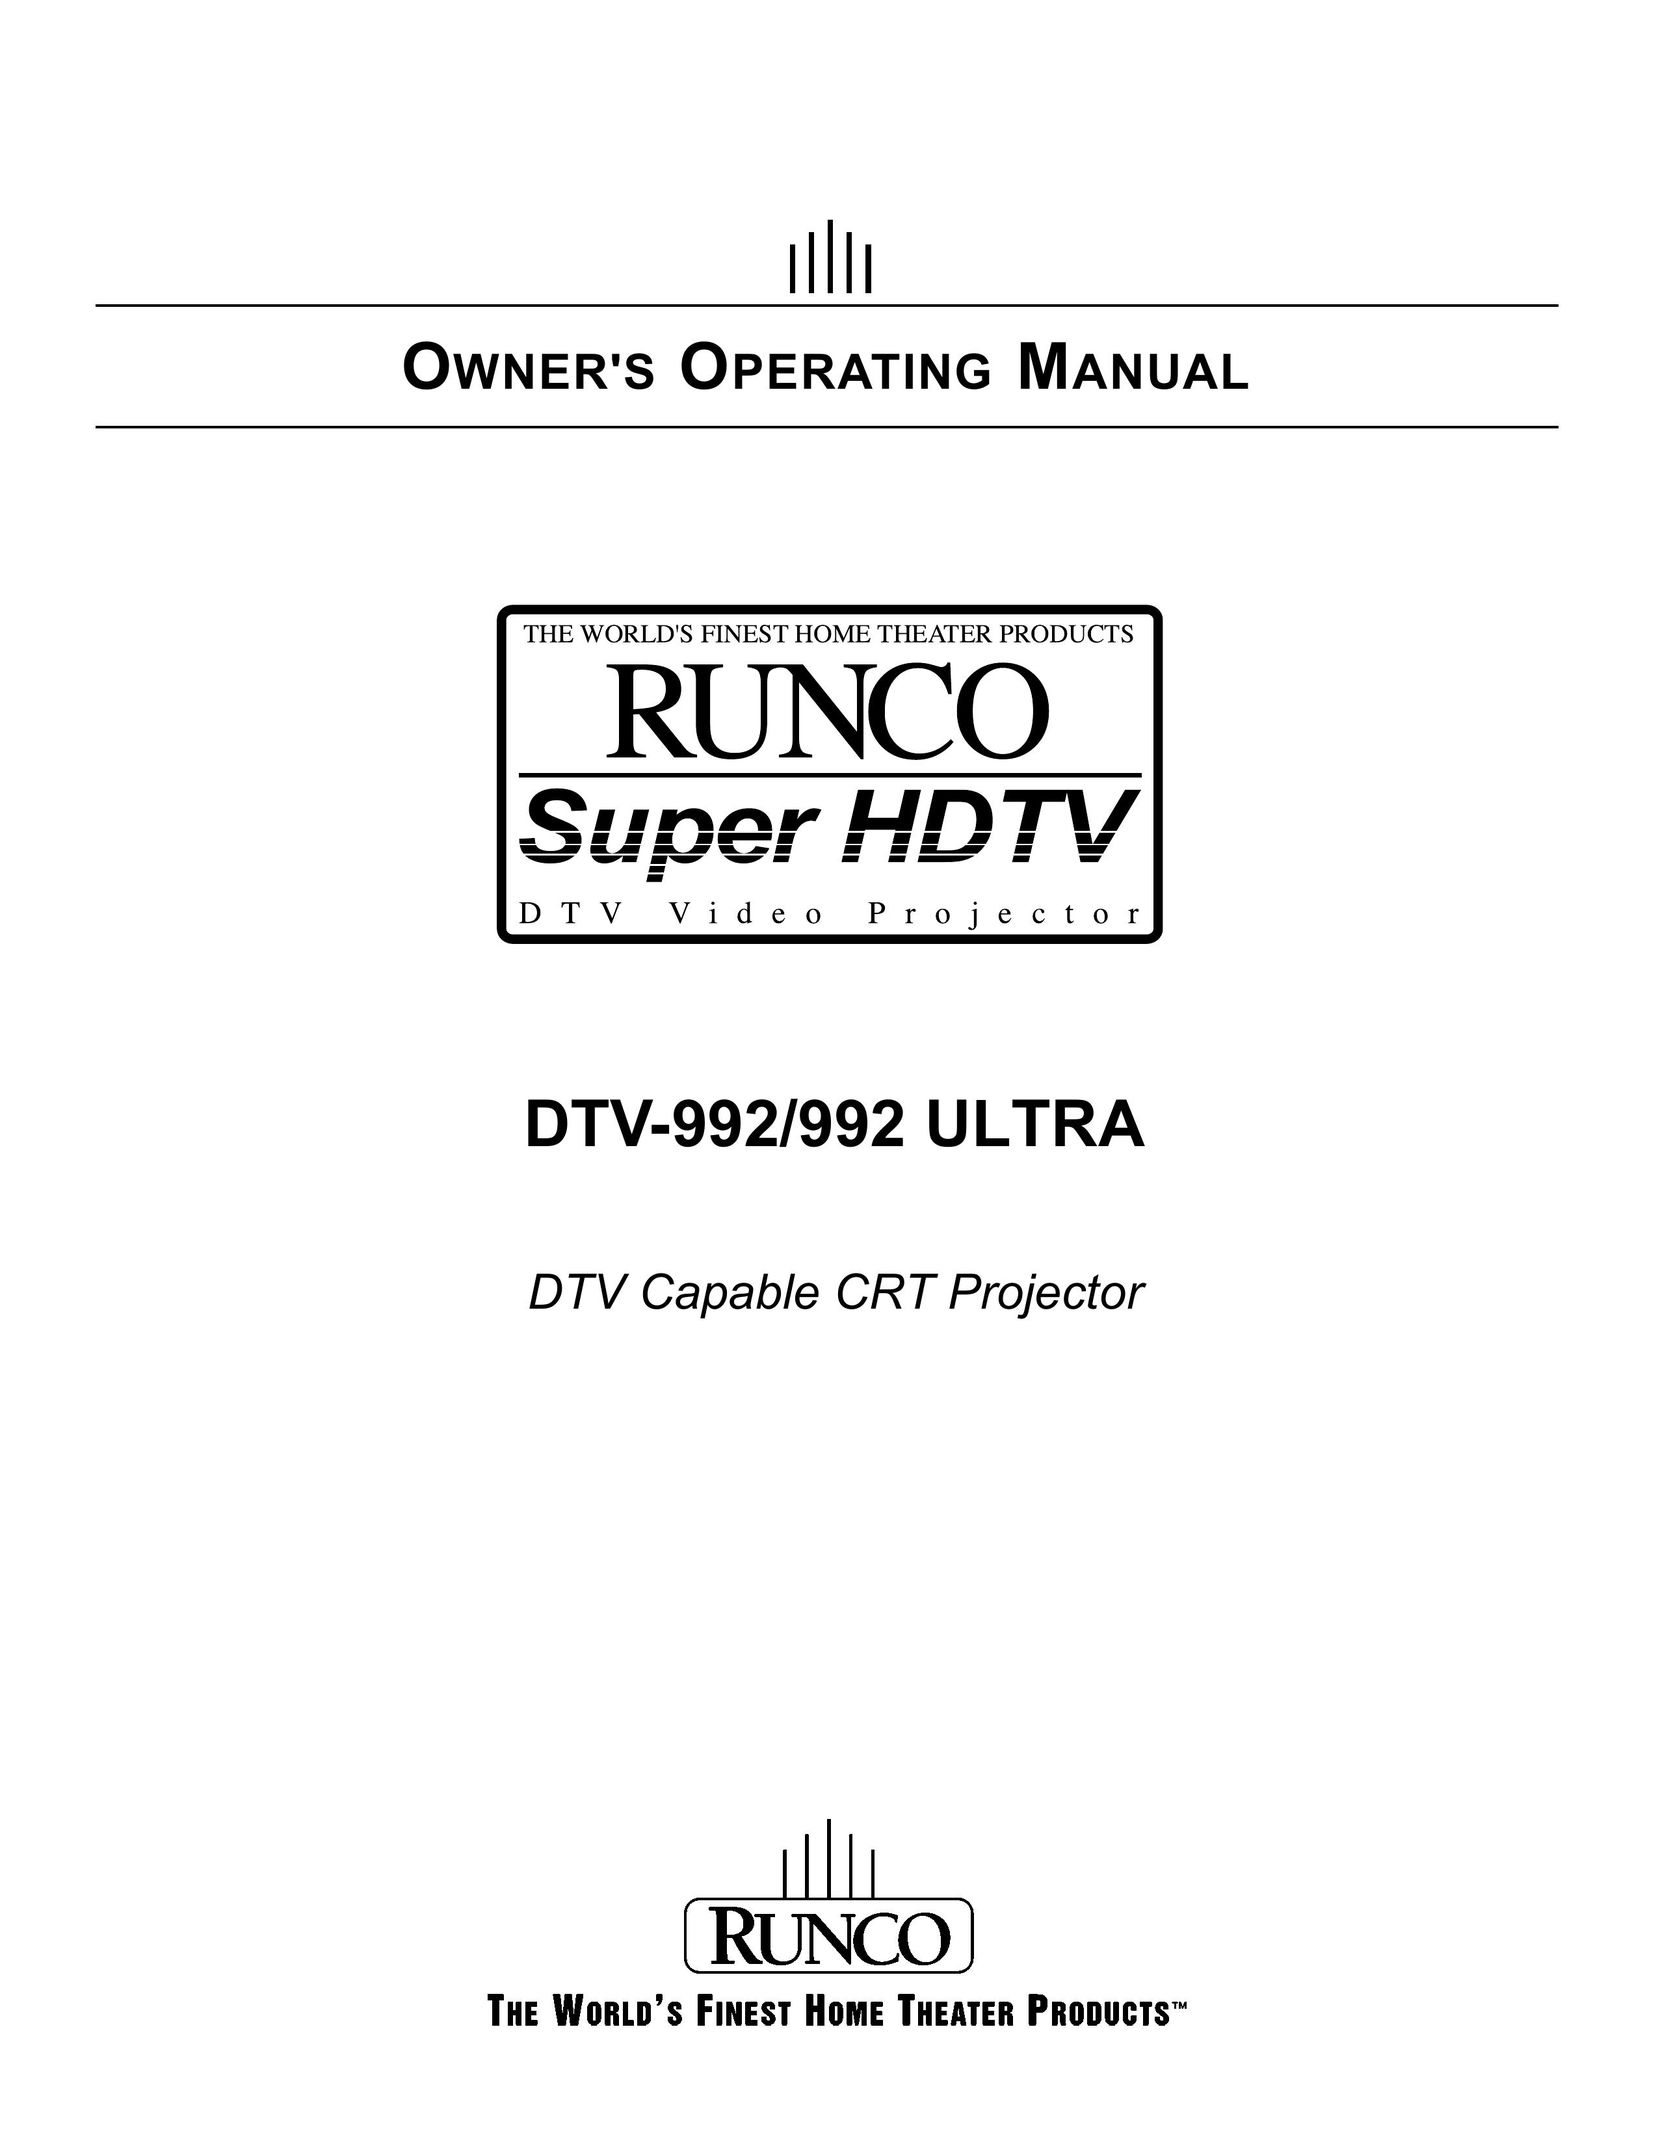 Runco DTV-992 Projector User Manual